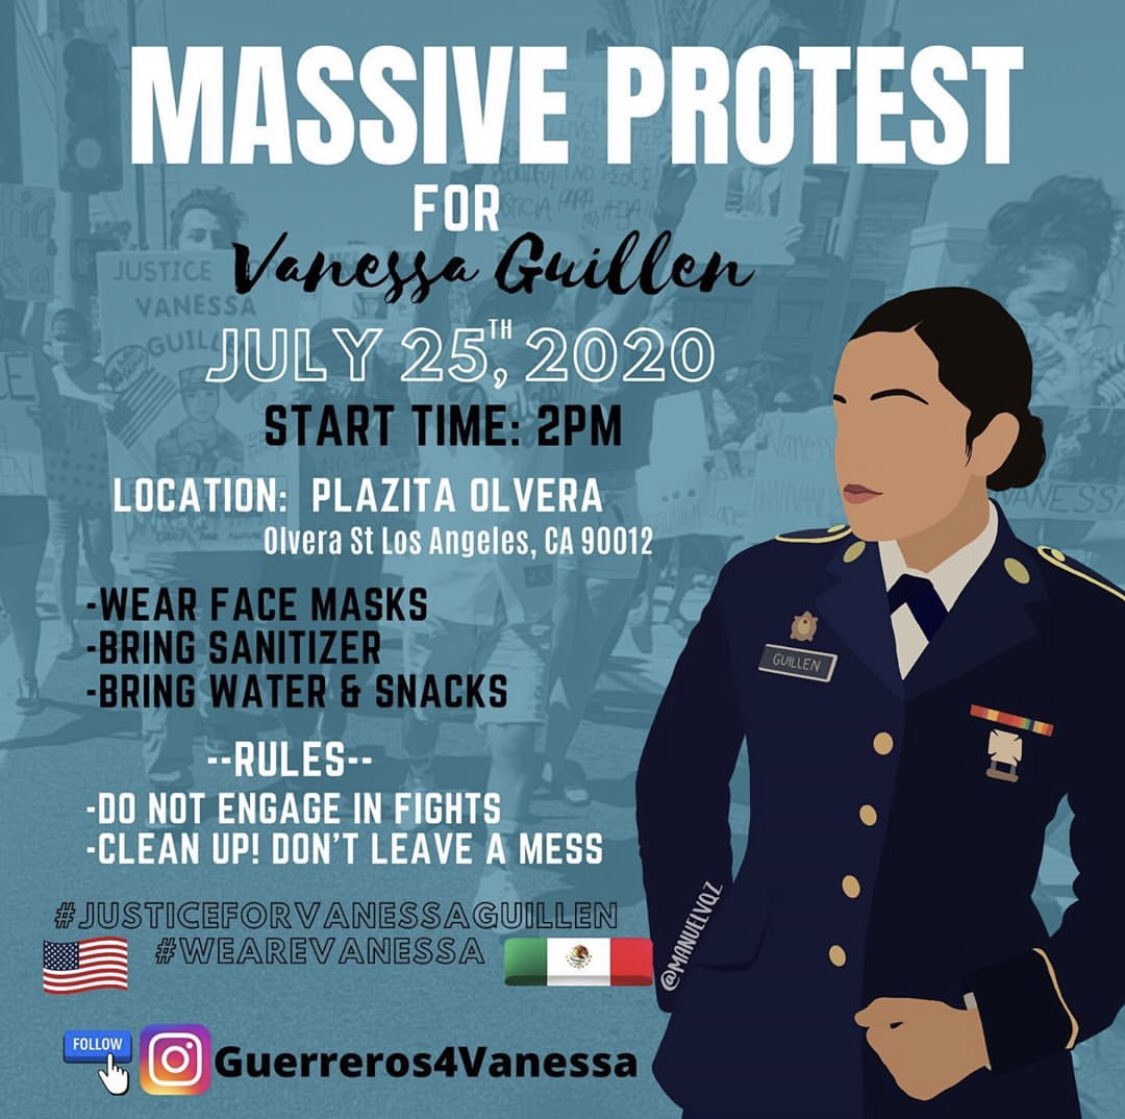 RT @LitLynnnn: Protest for Vanessa Guillen happening in LA on July 25th https://t.co/JAaylgbNH2